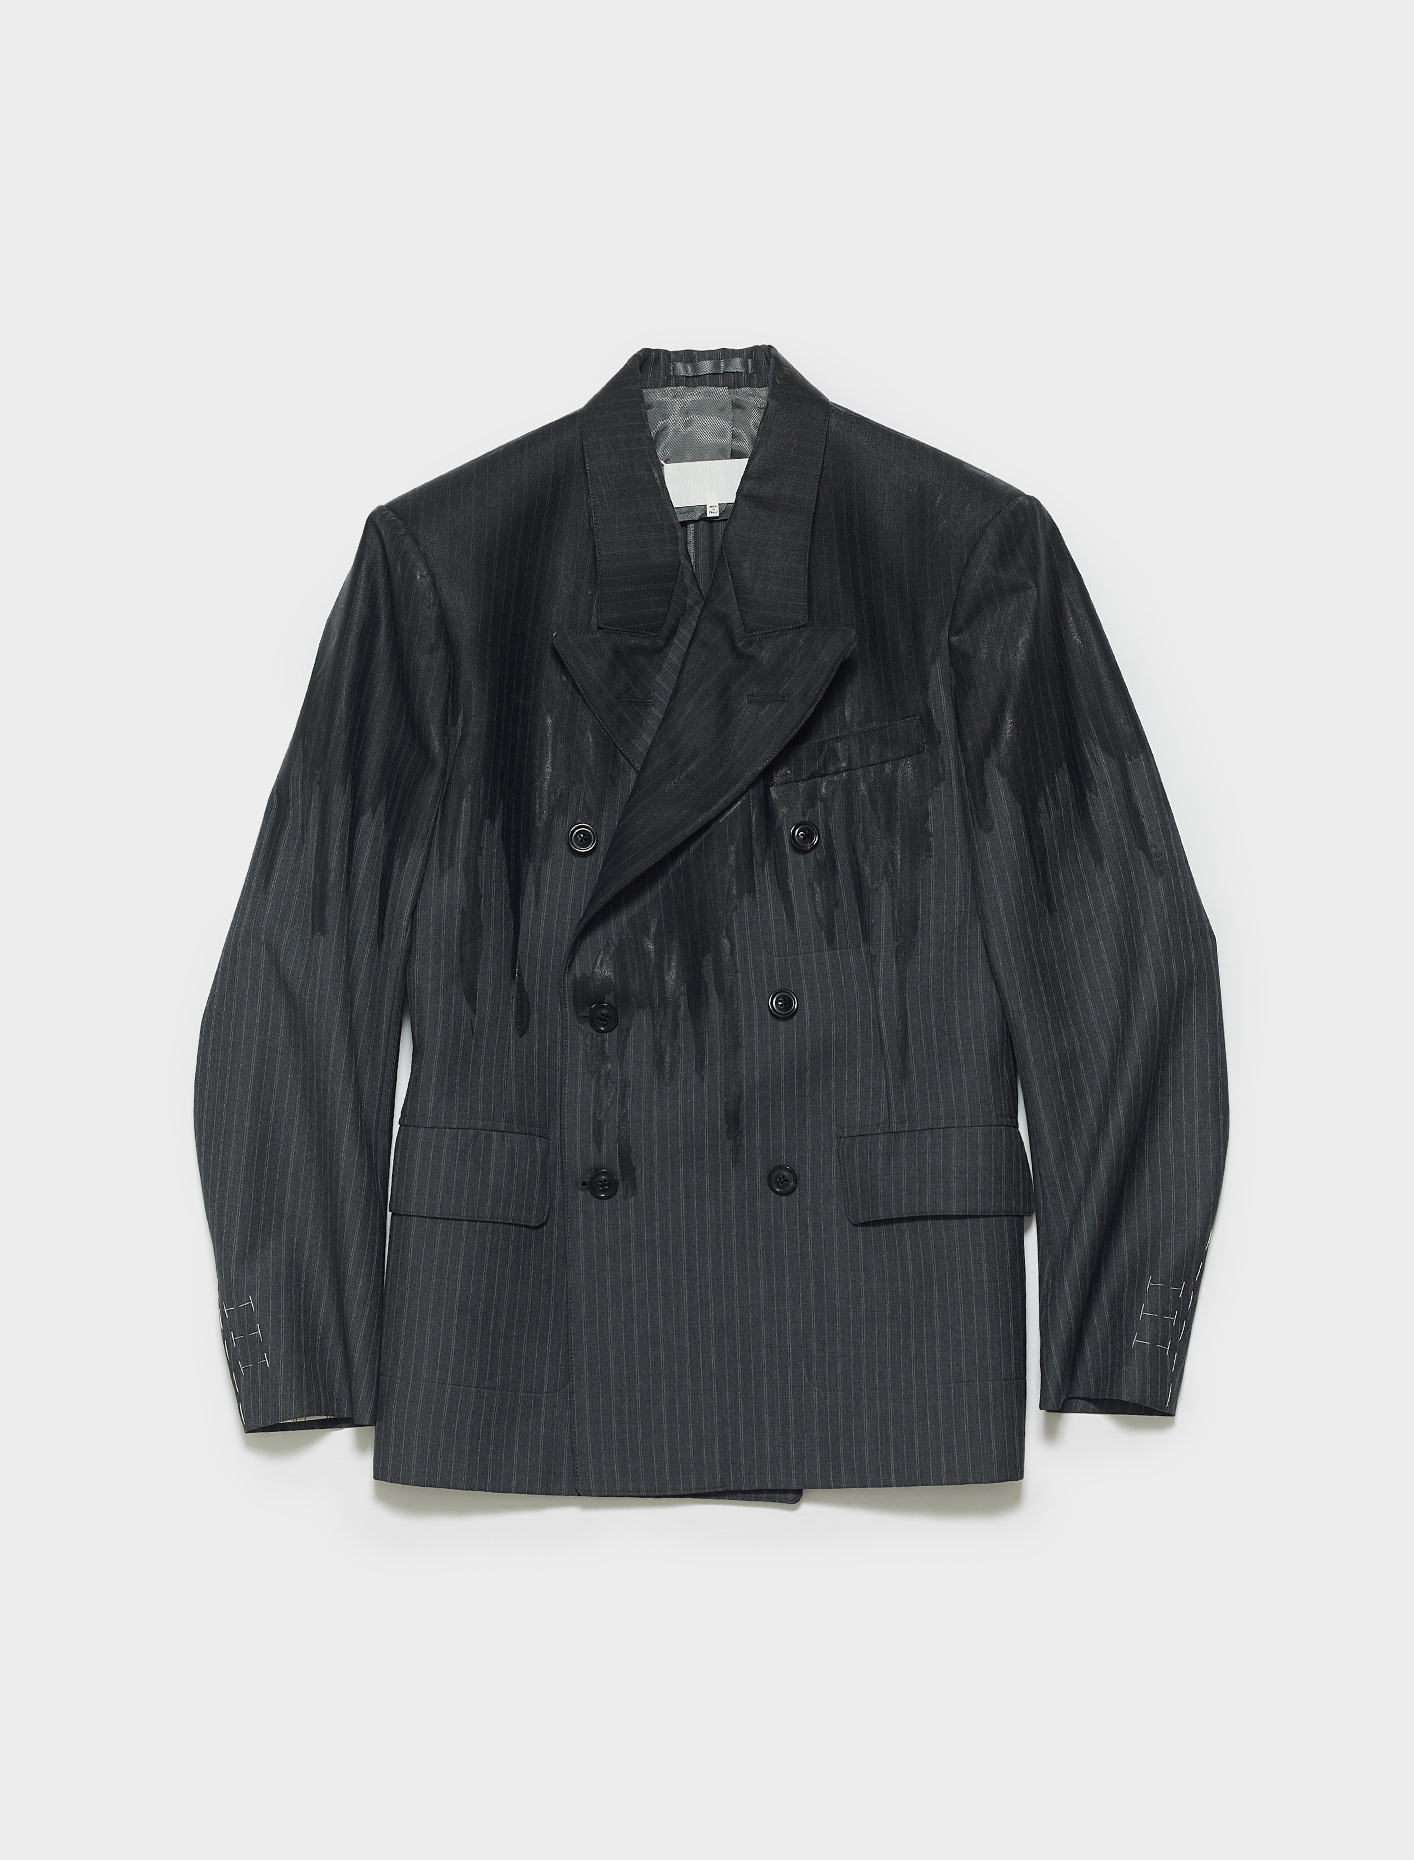 Maison Margiela Jacket in Dark Grey & Light Stripe | Voo Store